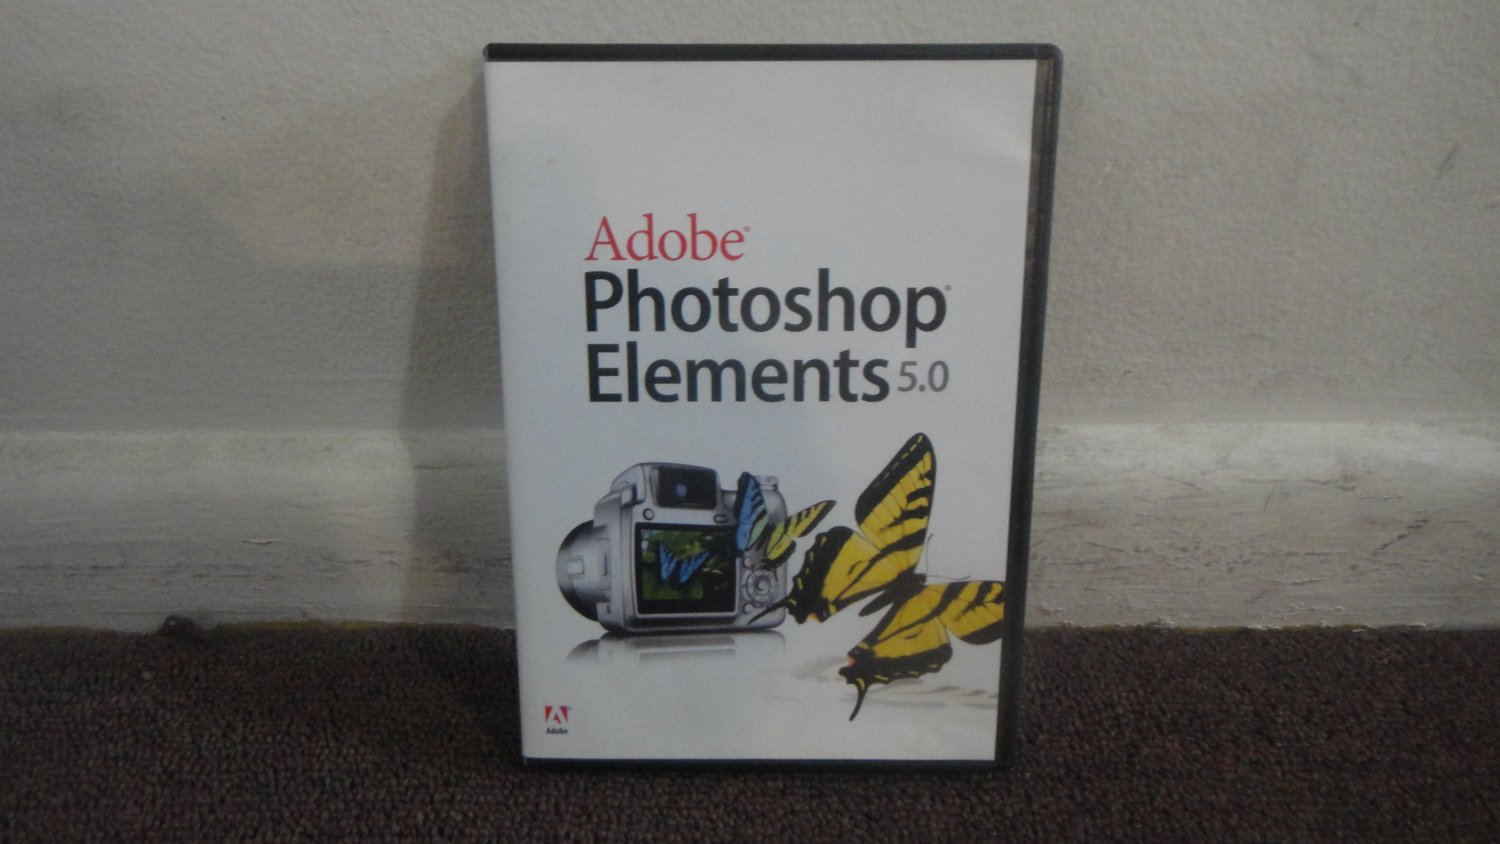 adobe photoshop elements 5.0 free download full version